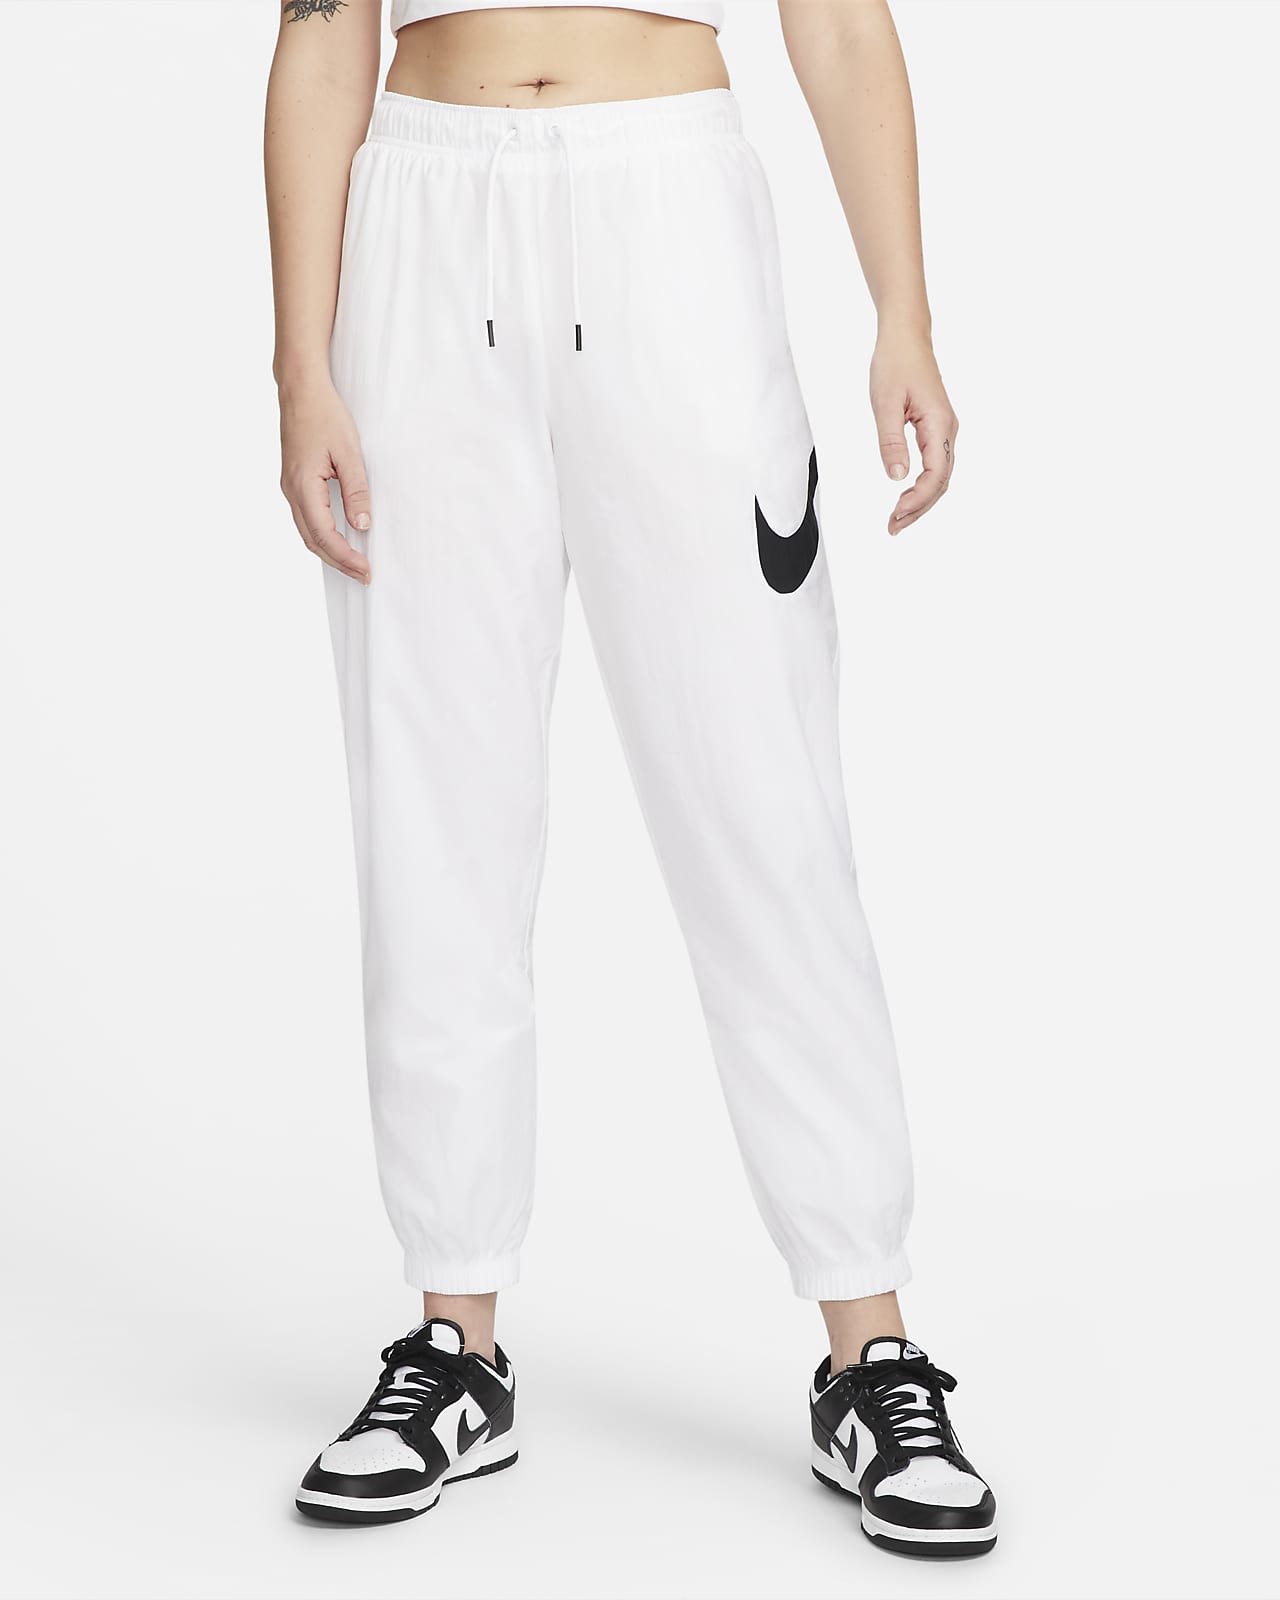 Pants de tiro medio para mujer Nike Sportswear Essential. Nike MX